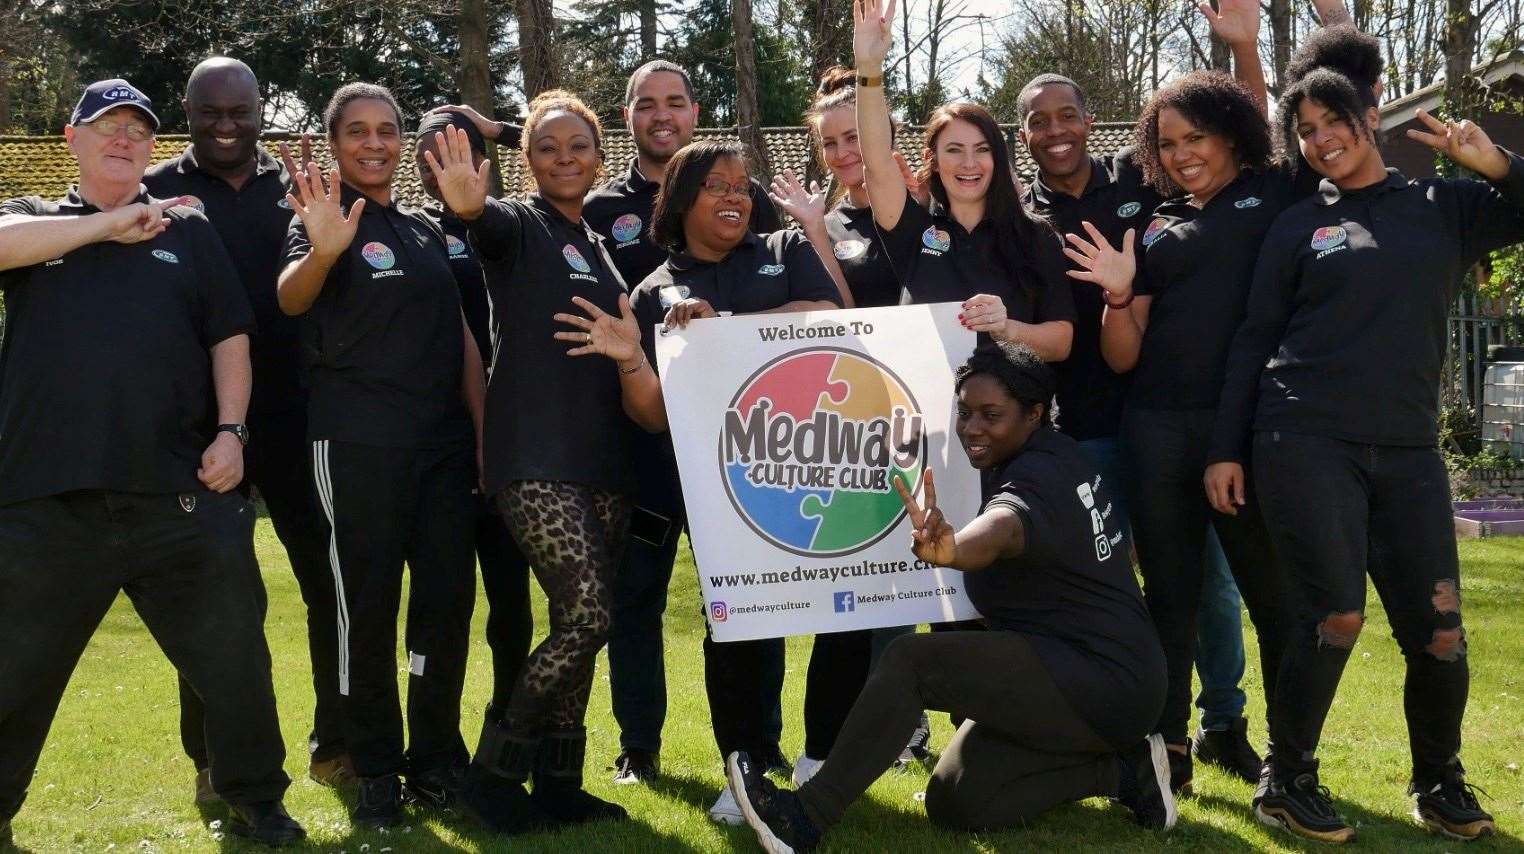 Medway Culture Club volunteers